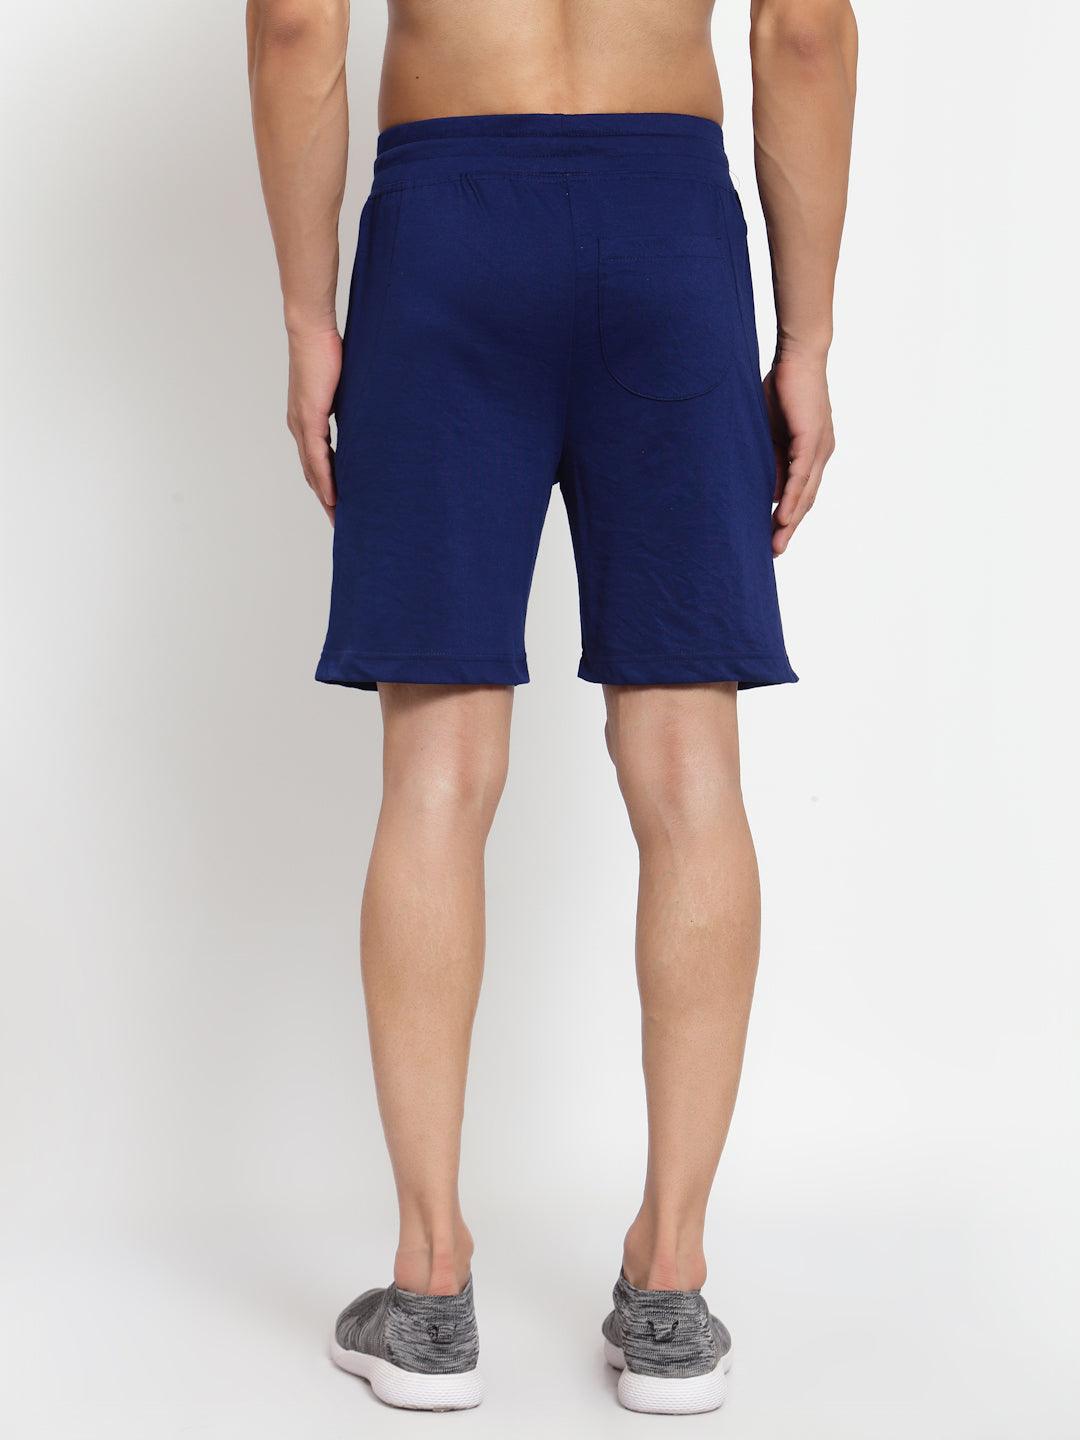 Sporto Men's Solid Lounge Shorts - Insignia Blue